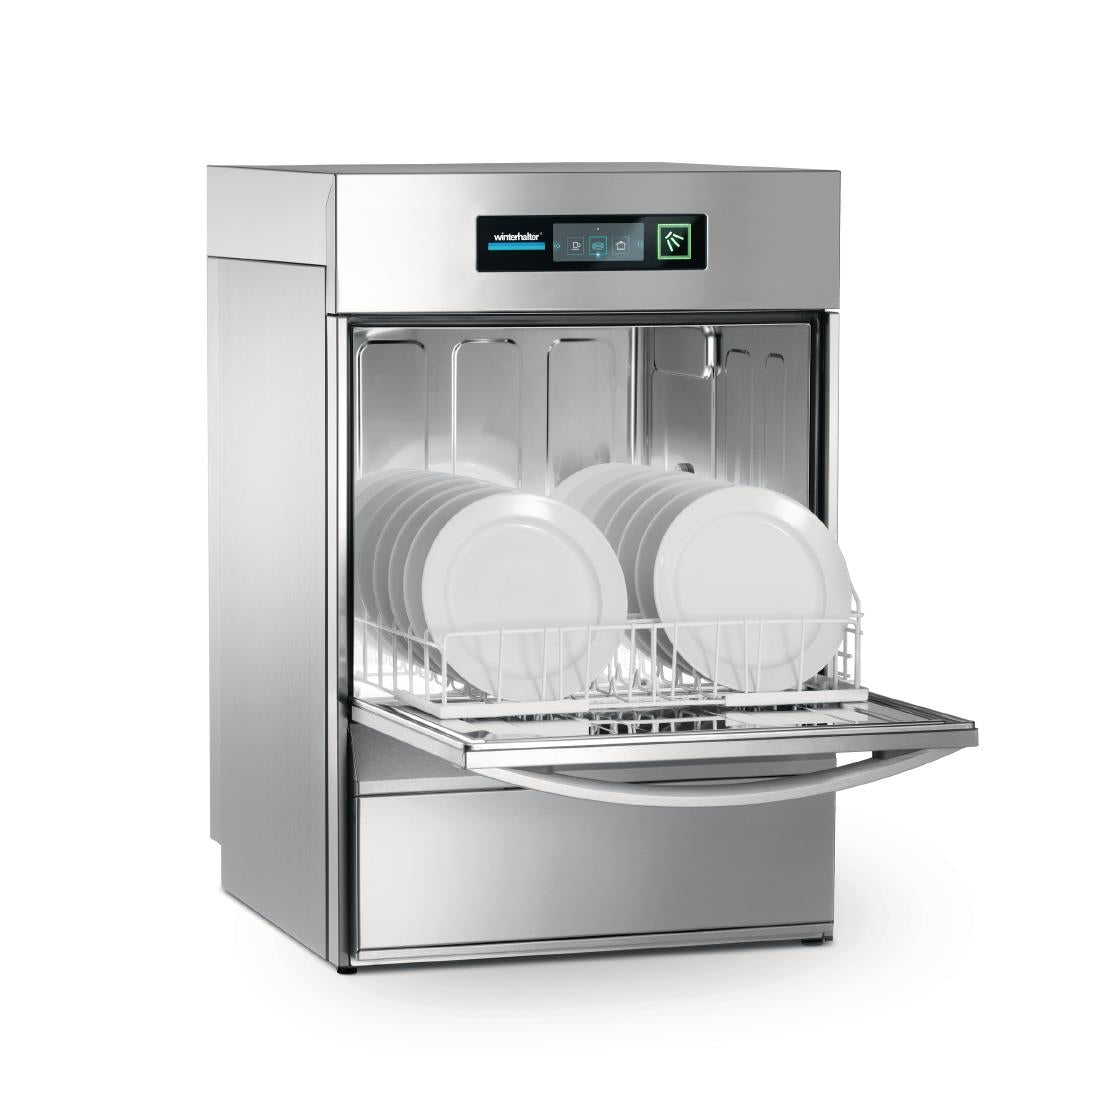 GF413 Winterhalter Undercounter Dishwasher UC-L Energy JD Catering Equipment Solutions Ltd